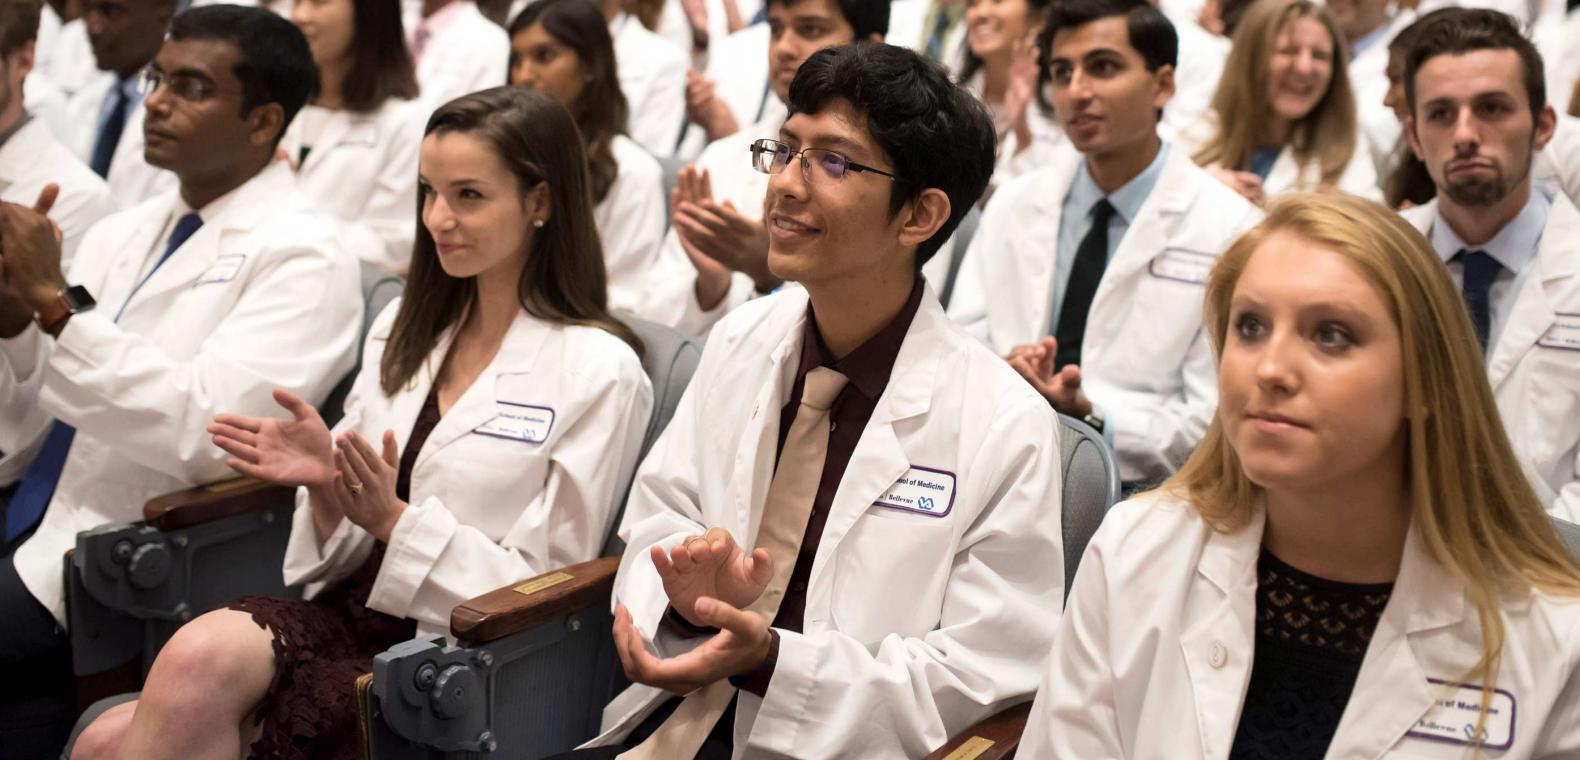 Students at the medical school graduation.